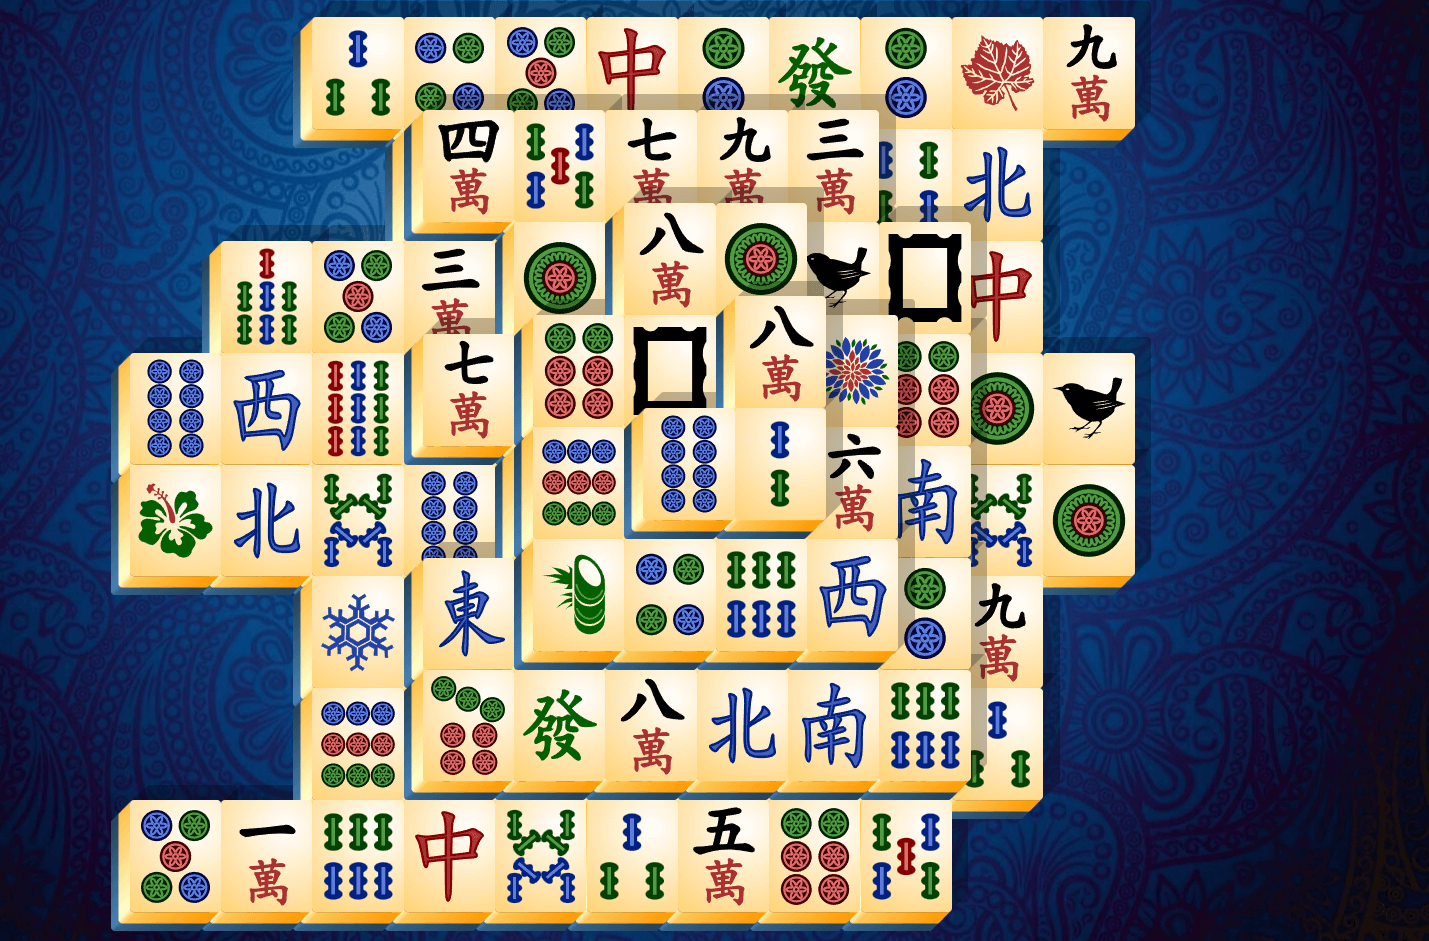 Samouczek Mahjonga jednoosobowego, krok 10